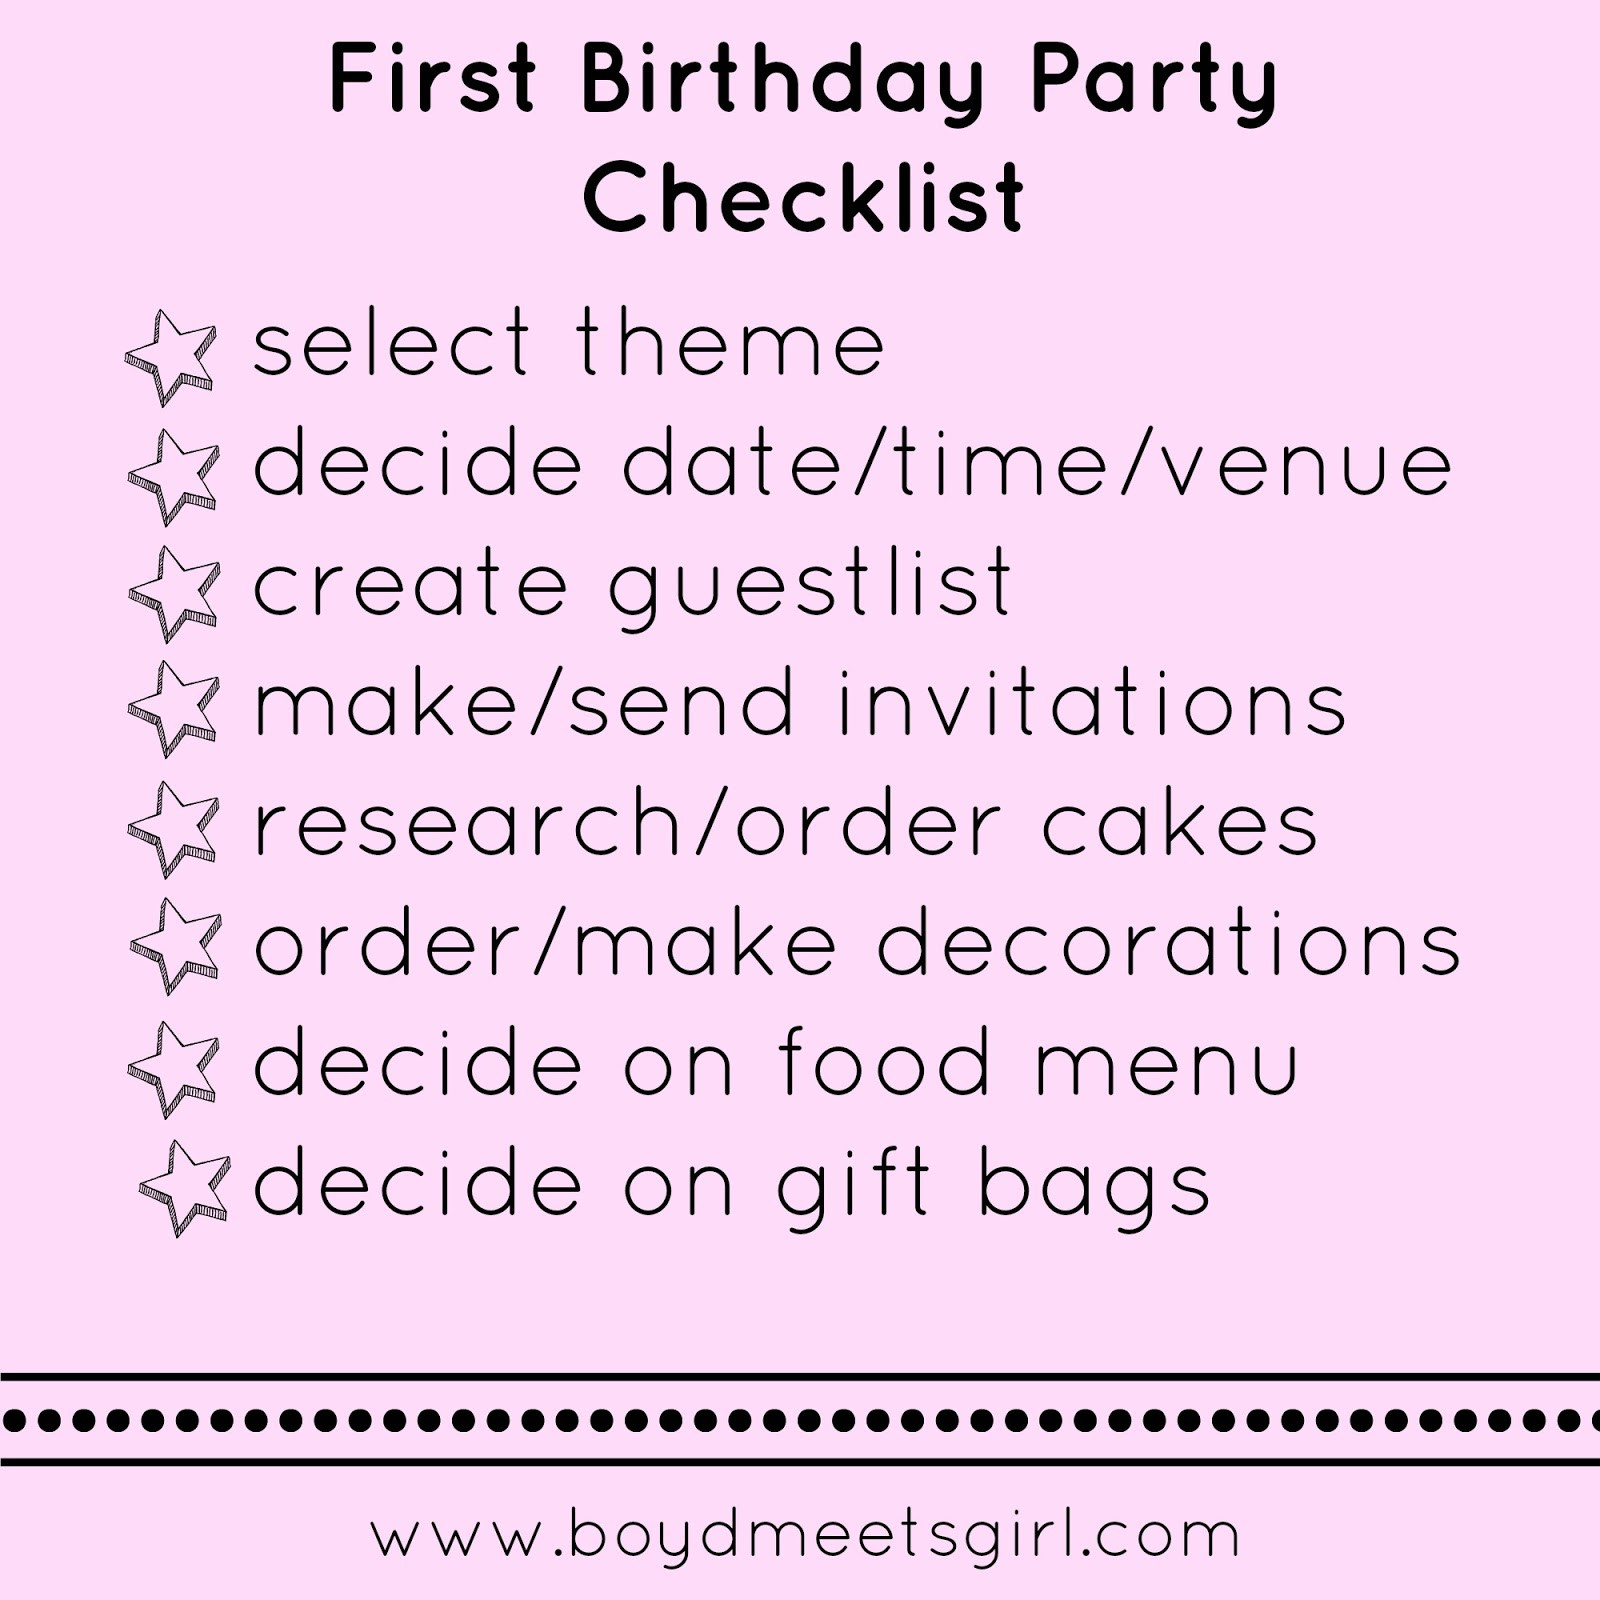 First Birthday Party Checklist
 First Birthday Party Checklist